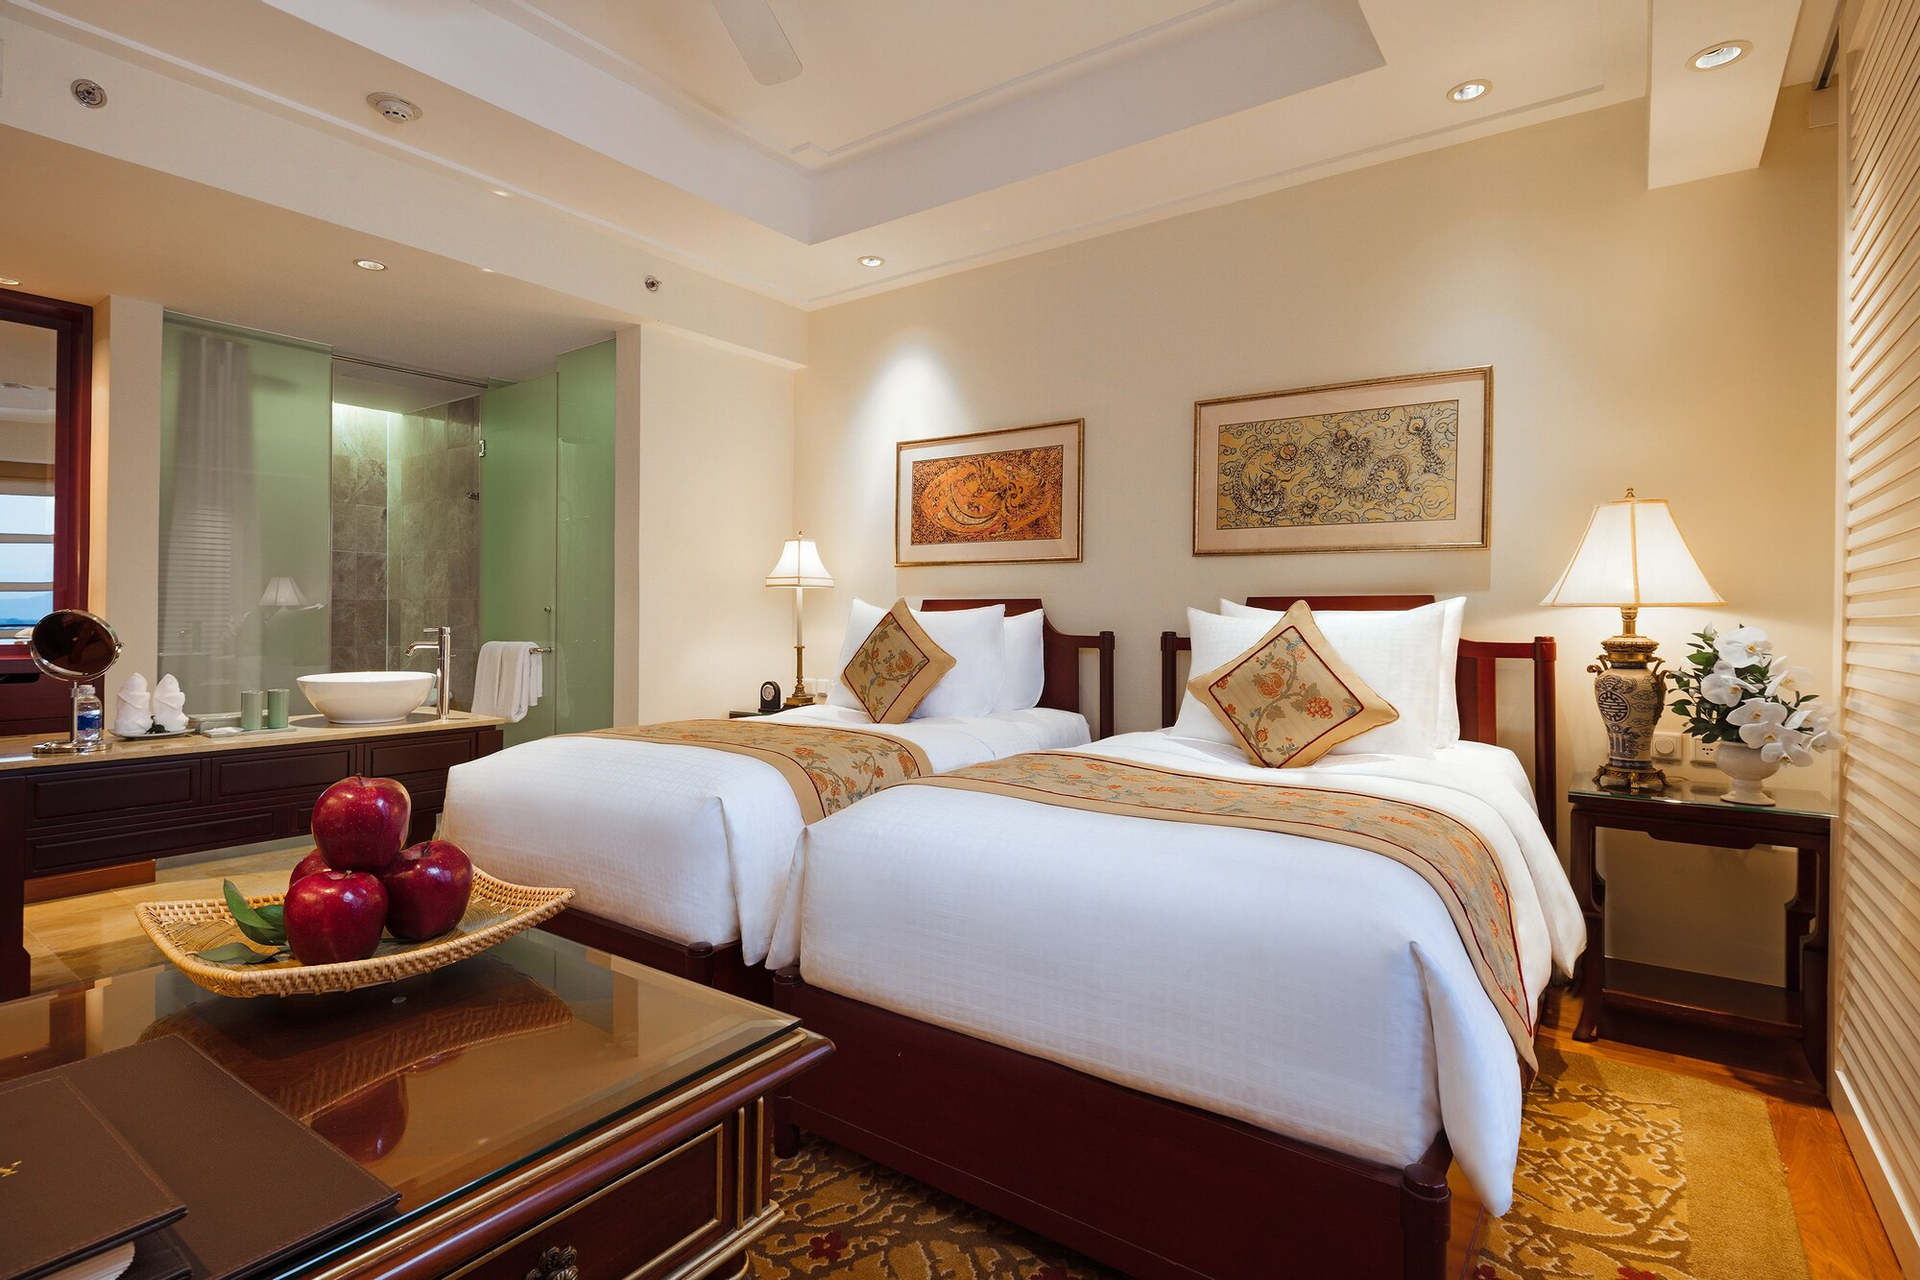 Bedroom 3, Indochine Palace Hotel, Huế